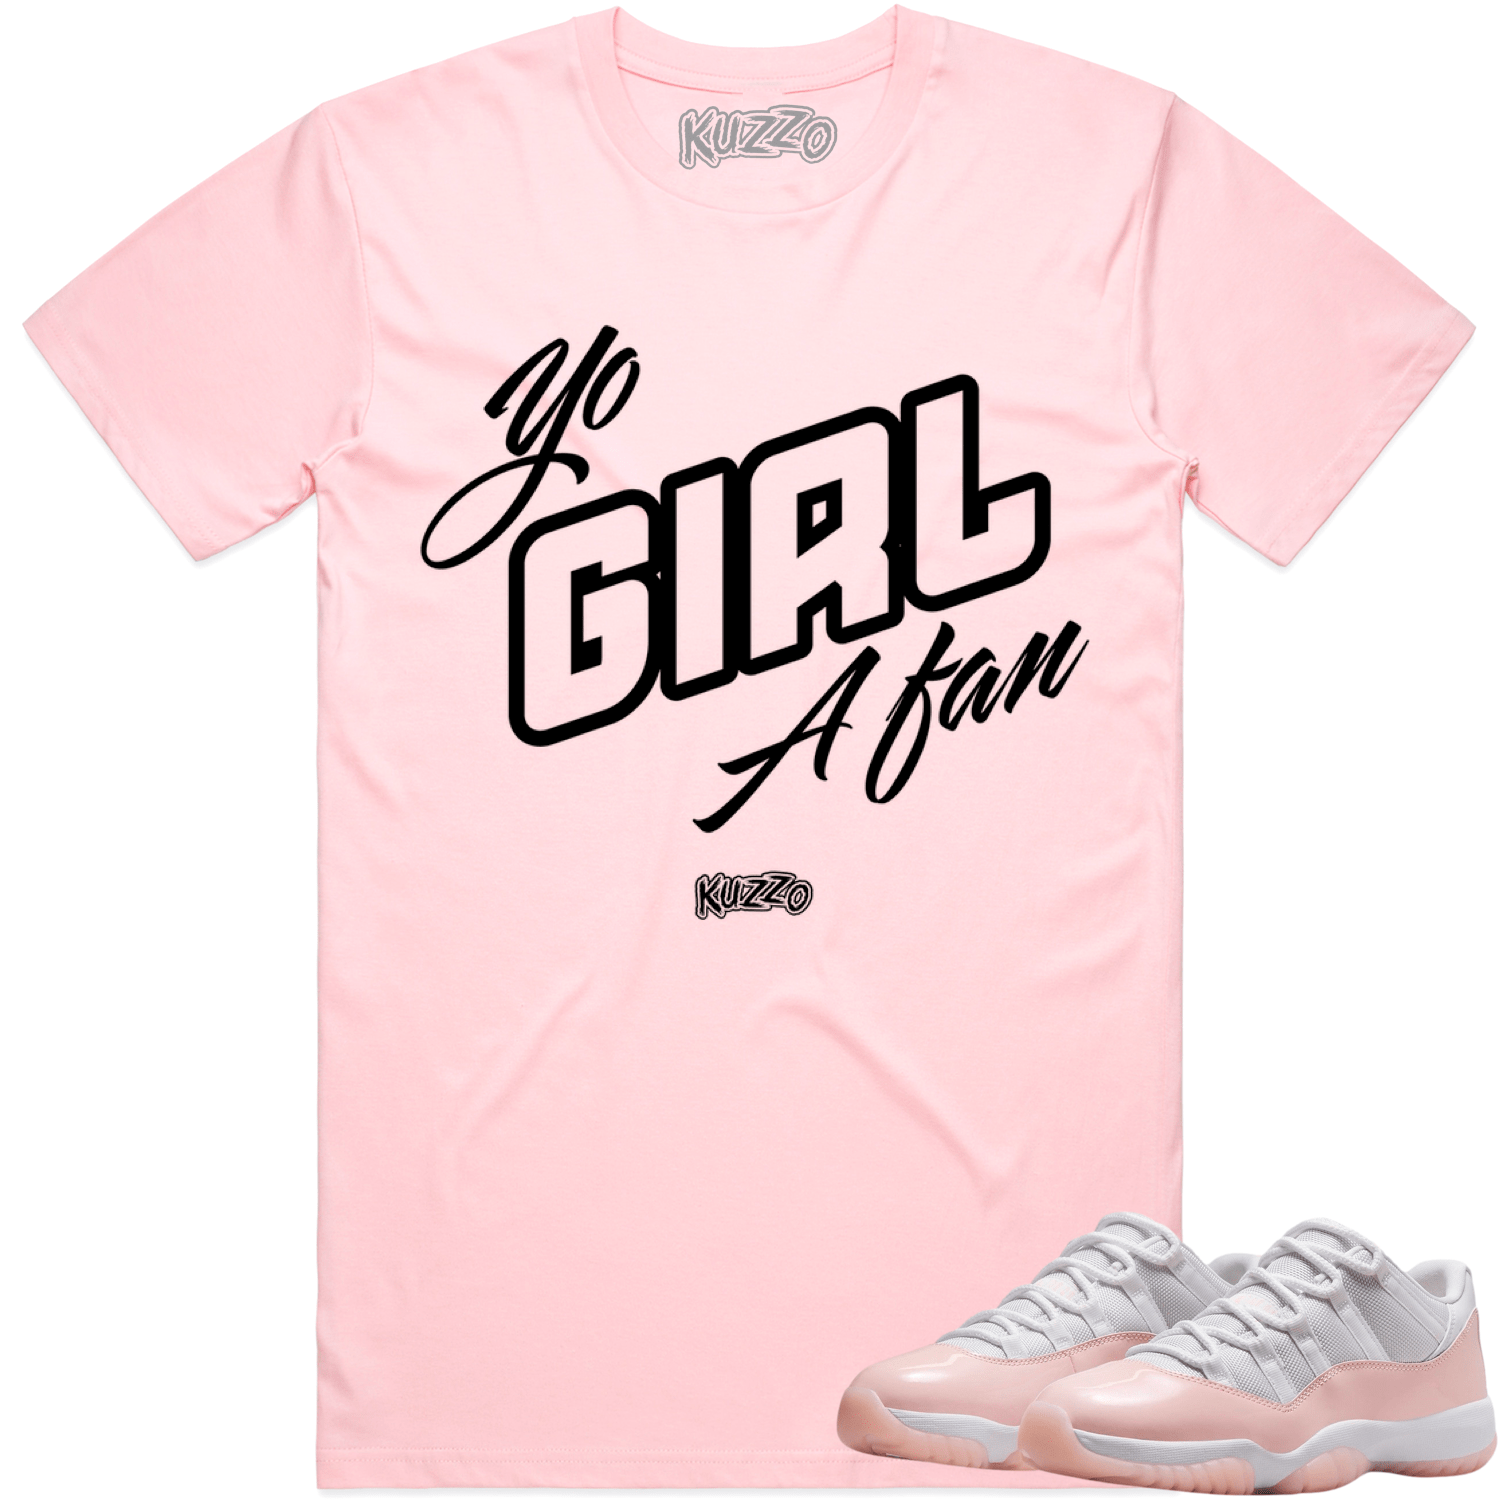 Legend Pink 11s Shirt - Jordan 11 Low Pink Sneaker Tees - Yo Girl